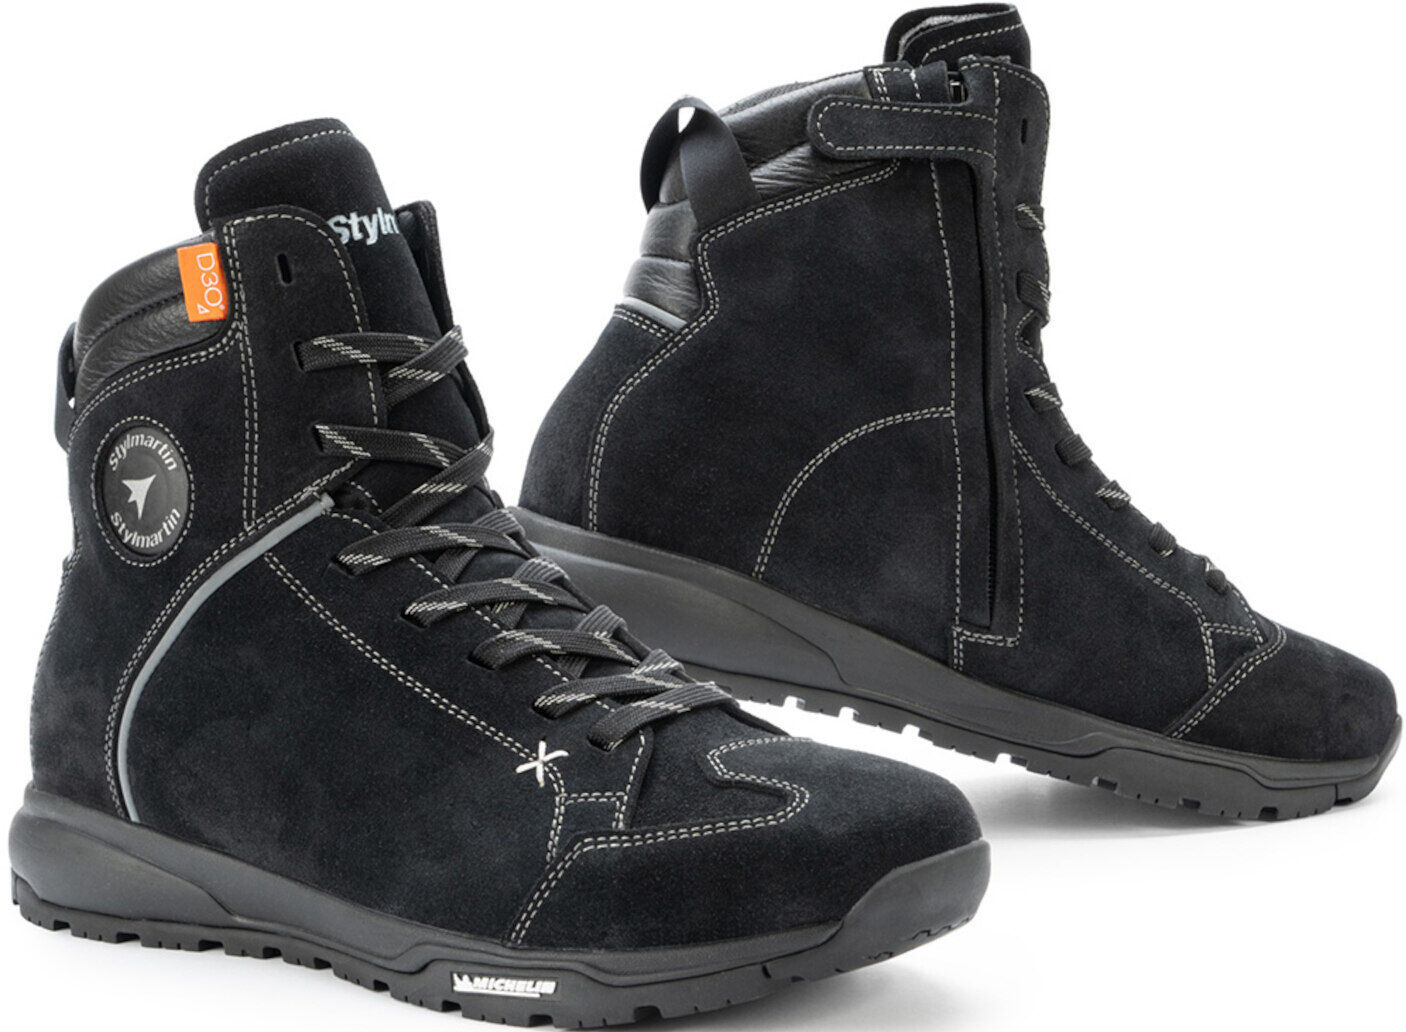 Stylmartin Zed Zapatos de moto impermeables - Negro (45)